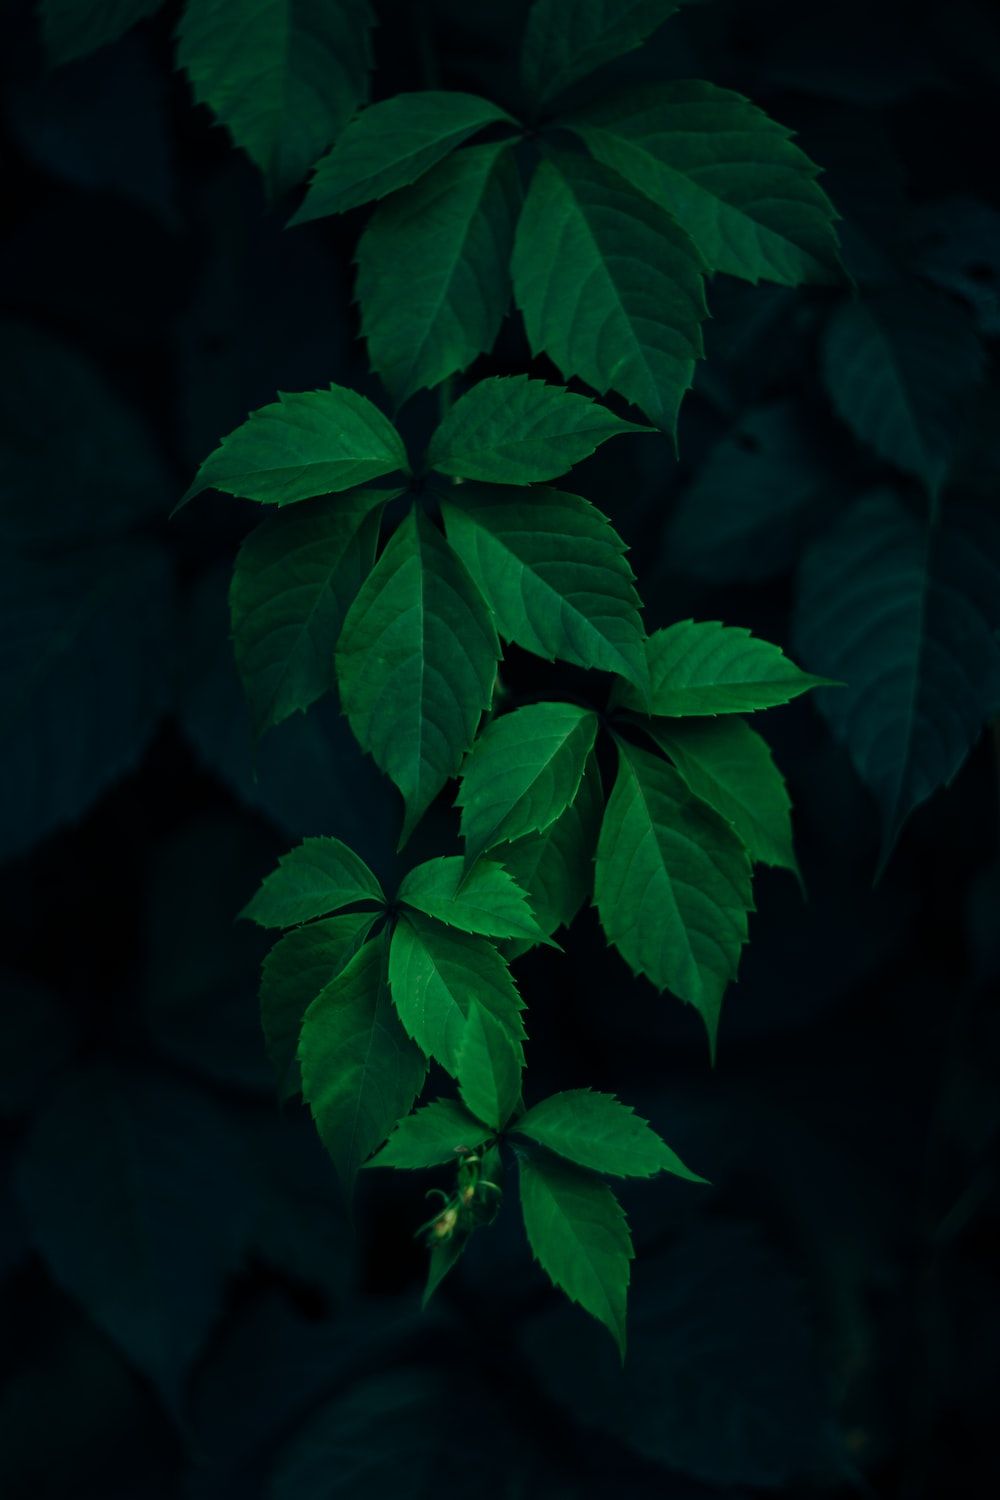 Green leaves on a black background - Dark green, leaves